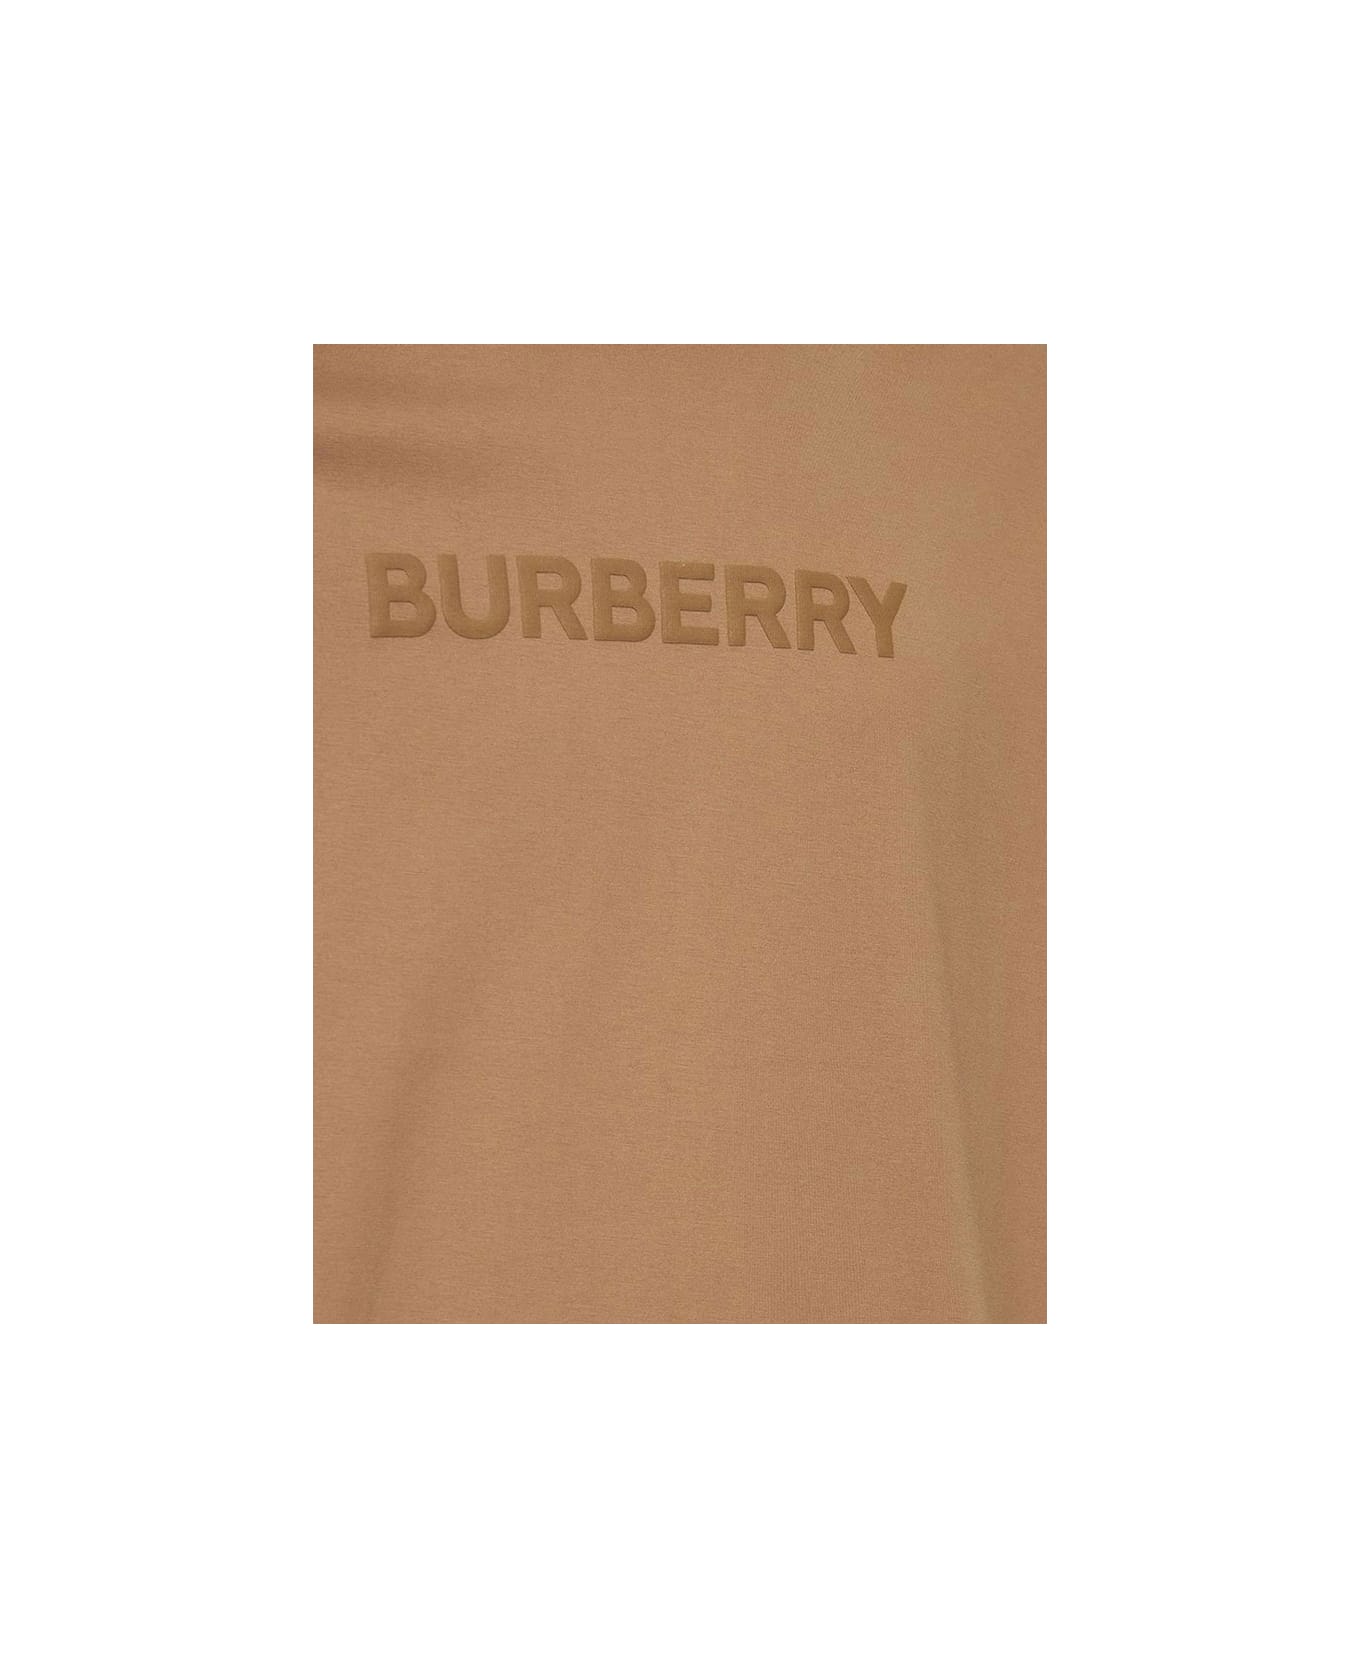 Burberry T-shirt - BEIGE シャツ